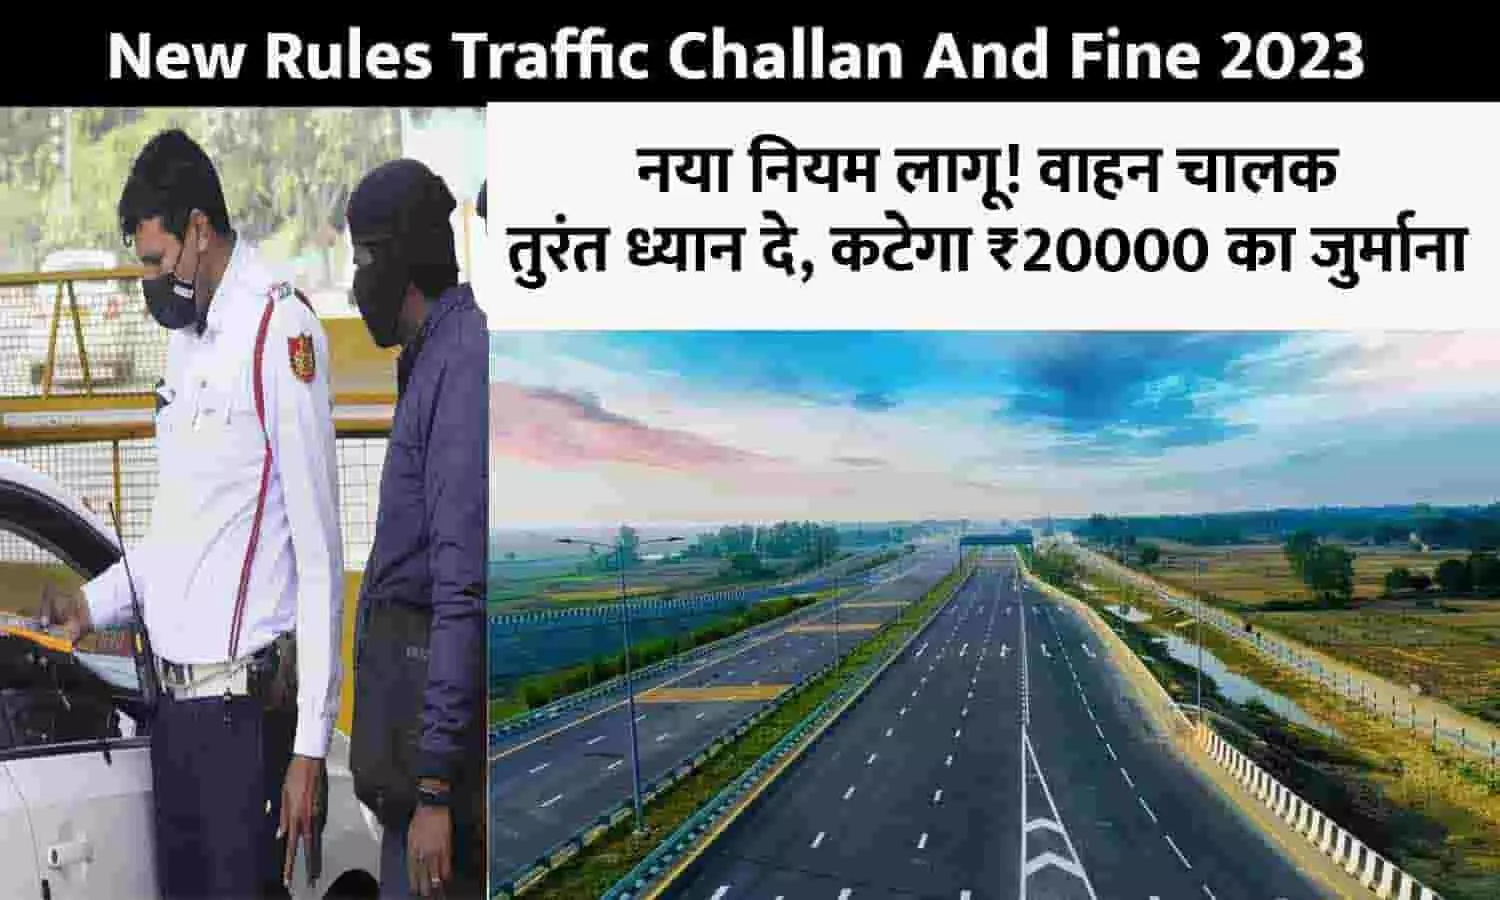 New Rules Traffic Challan And Fine Big Alert 2023: नया नियम लागू! वाहन चालक तुरंत ध्यान दे, कटेगा ₹20000 का जुर्माना